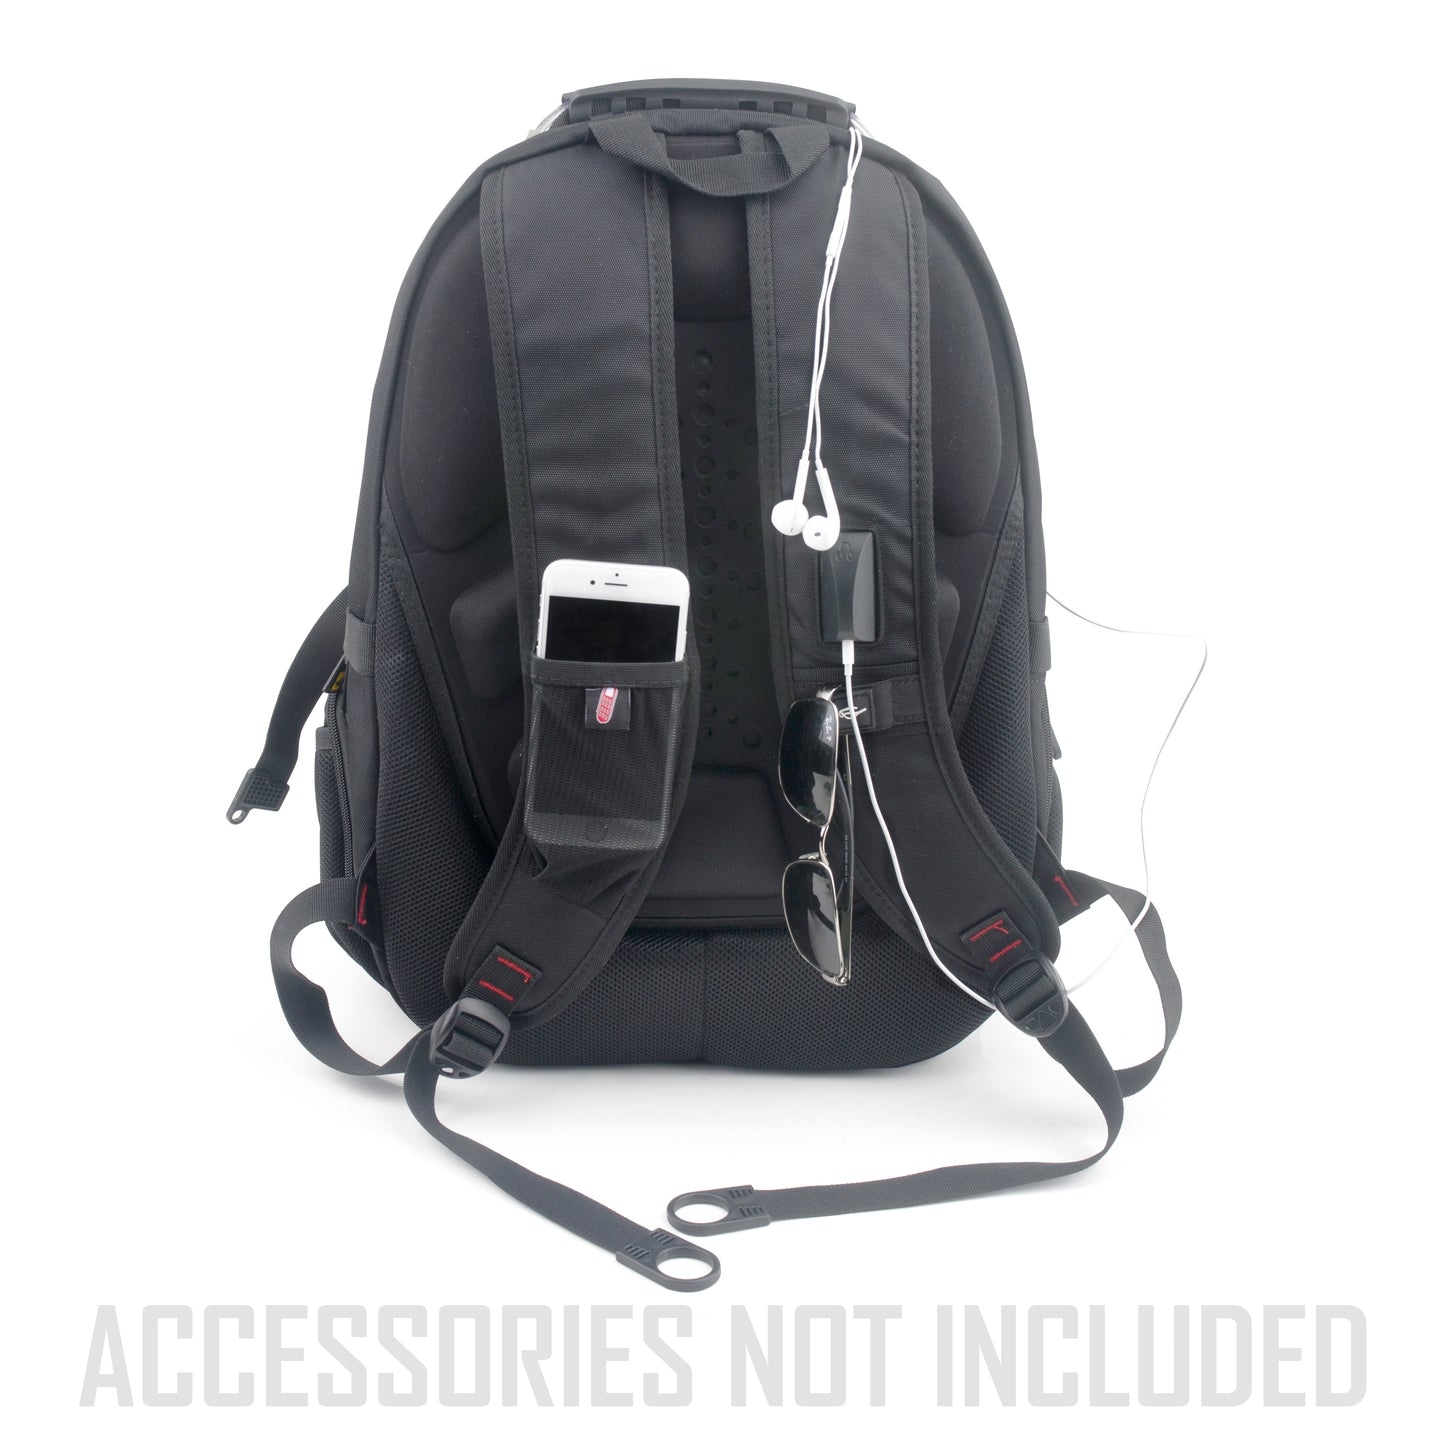 
                  
                    Proshield II - Bulletproof Backpack, Level IIIA w/ Gel Padding - Backpack
                  
                